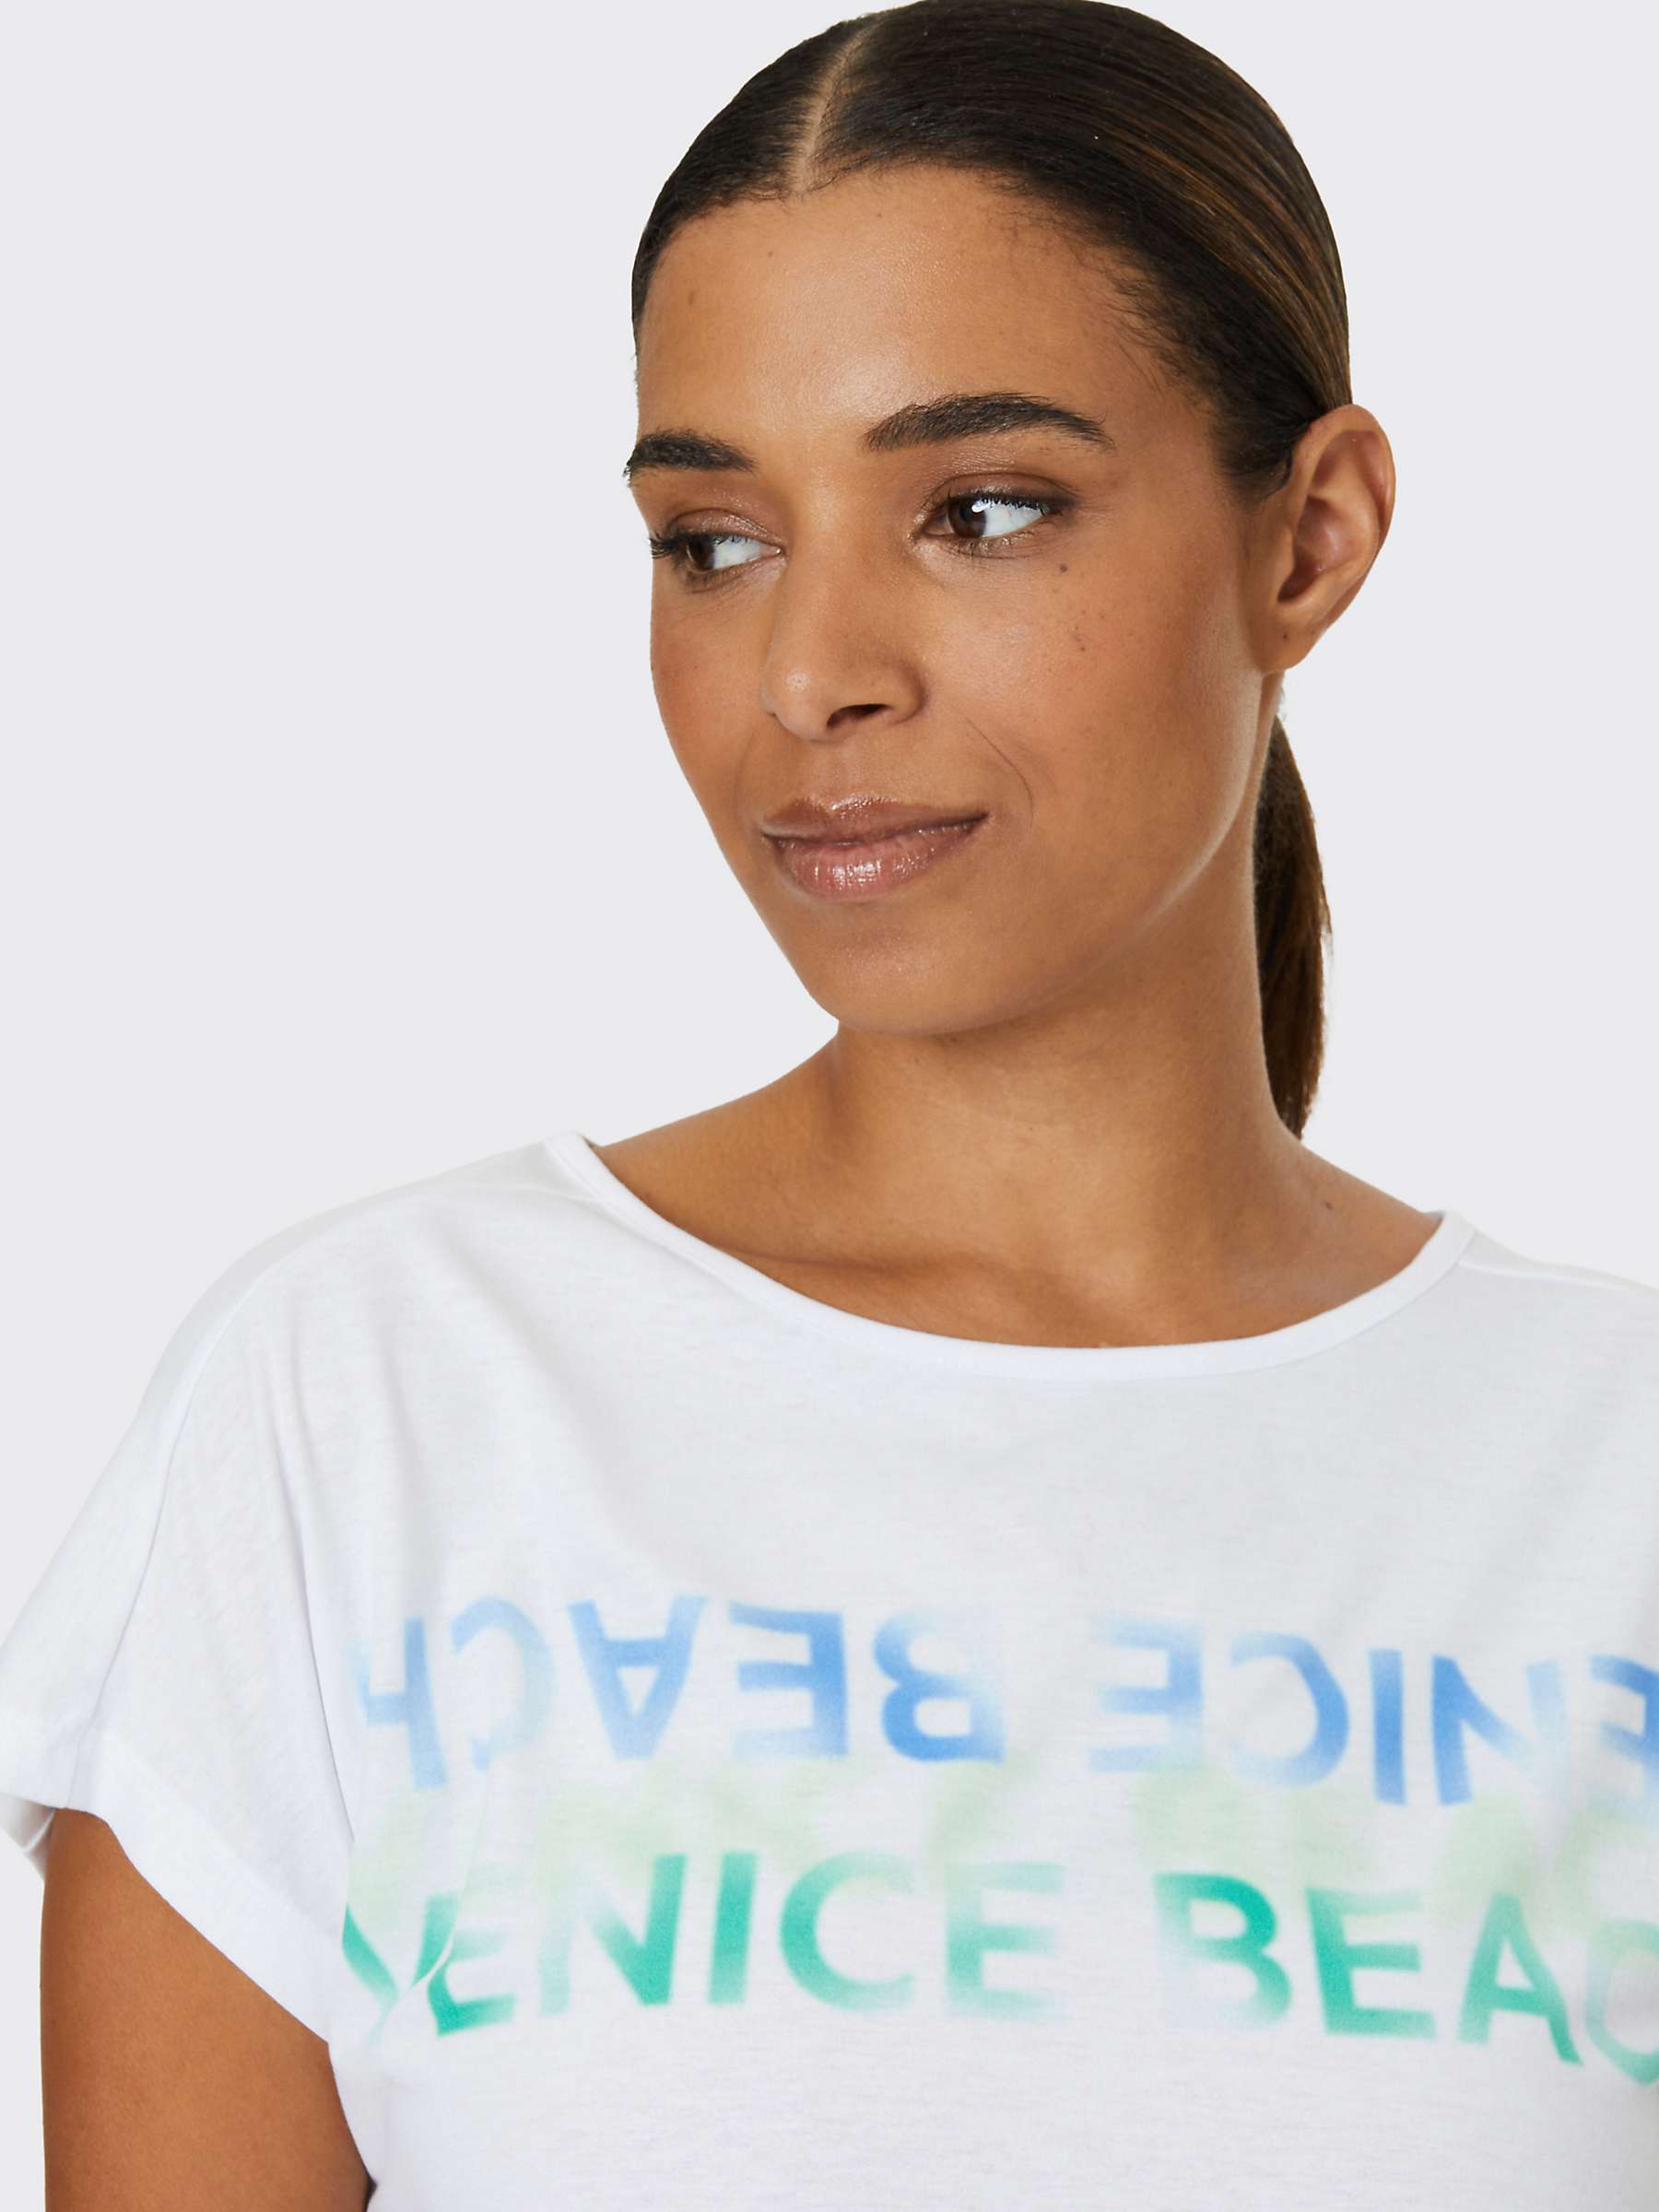 Buy Venice Beach Tia T-Shirt, White/Multi Online at johnlewis.com